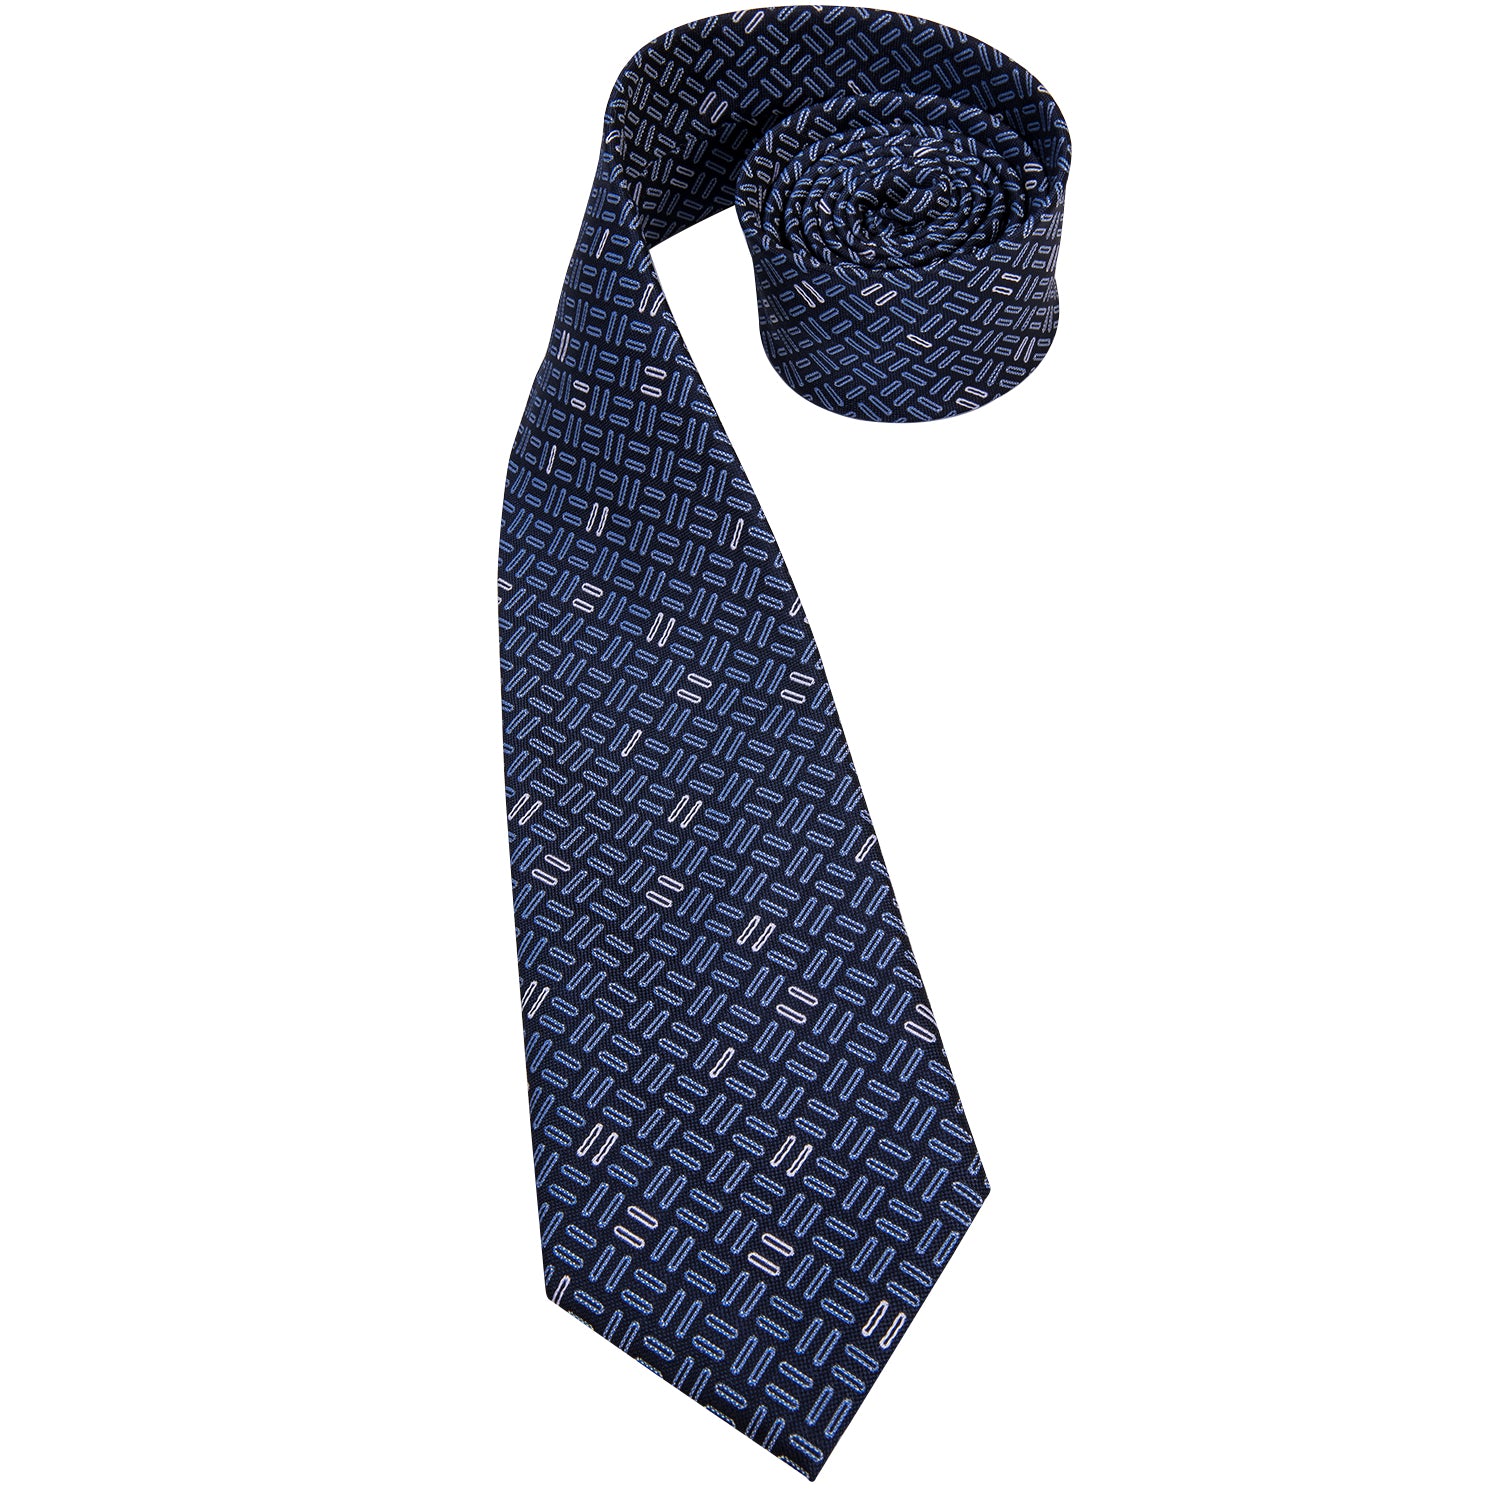 Novelty Blue Stripe Tie Pocket Square Cufflinks Set